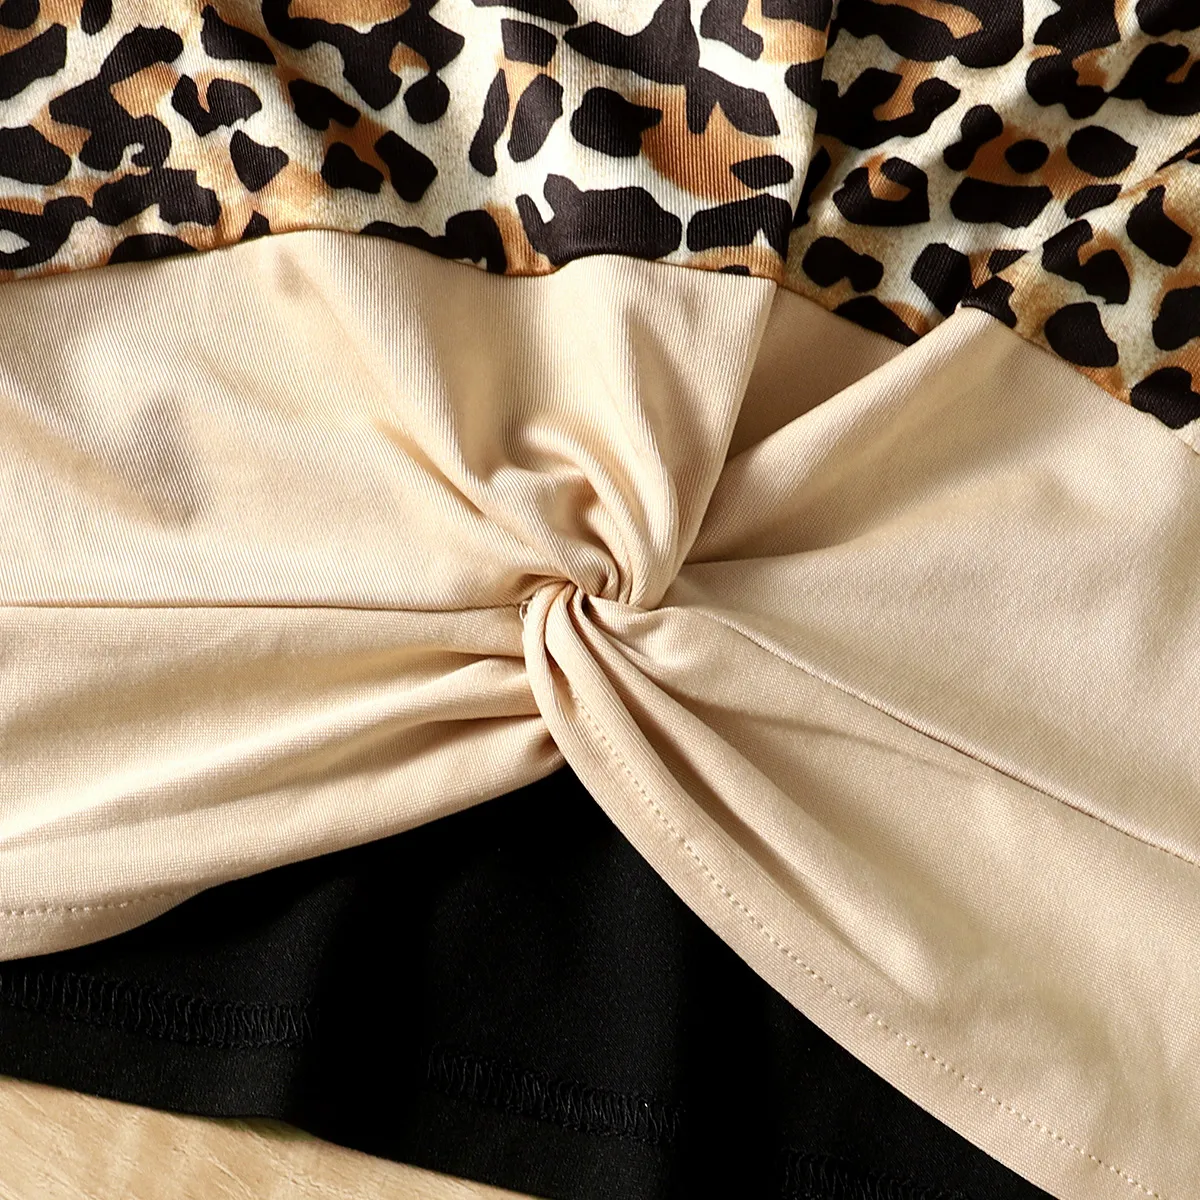 2pcs Kid Girl Leopard Print Twist Short-sleeve Tee and Pants Set Caramel big image 1